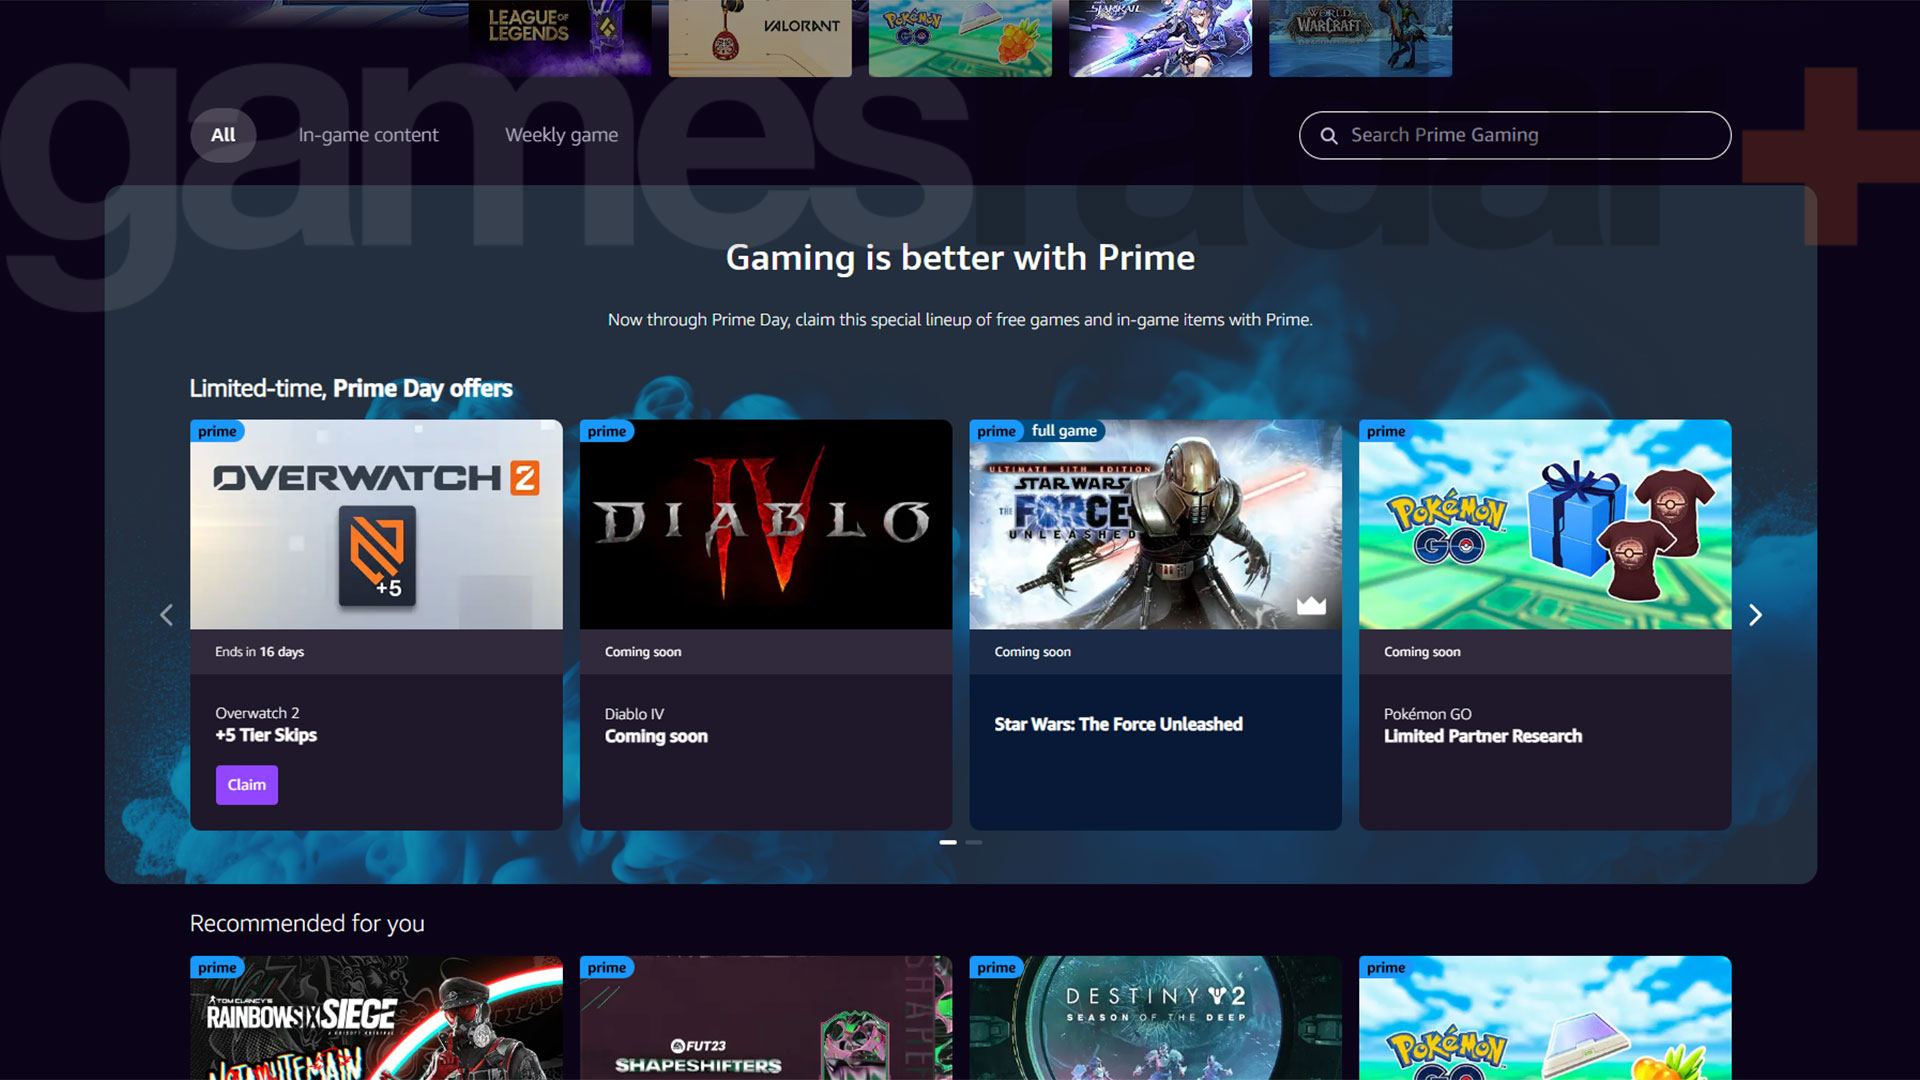 Главная страница Prime Gaming, показывающая награду Diablo 4 как Coming soon